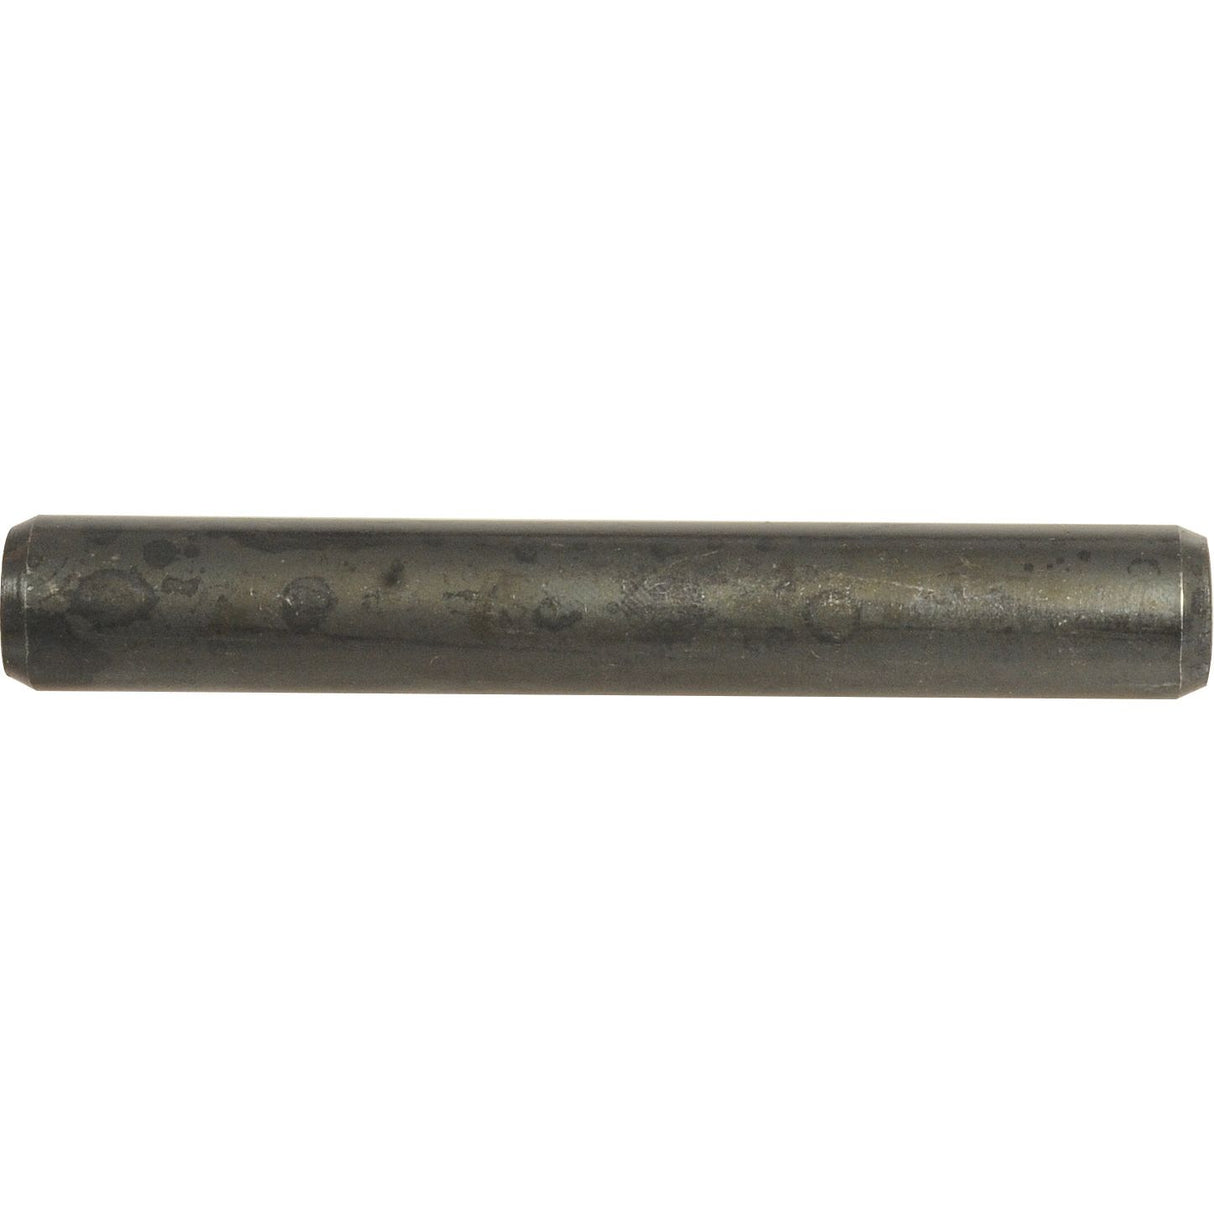 Metric Roll Pin, Pin⌀4mm x 60mm
 - S.11614 - Farming Parts